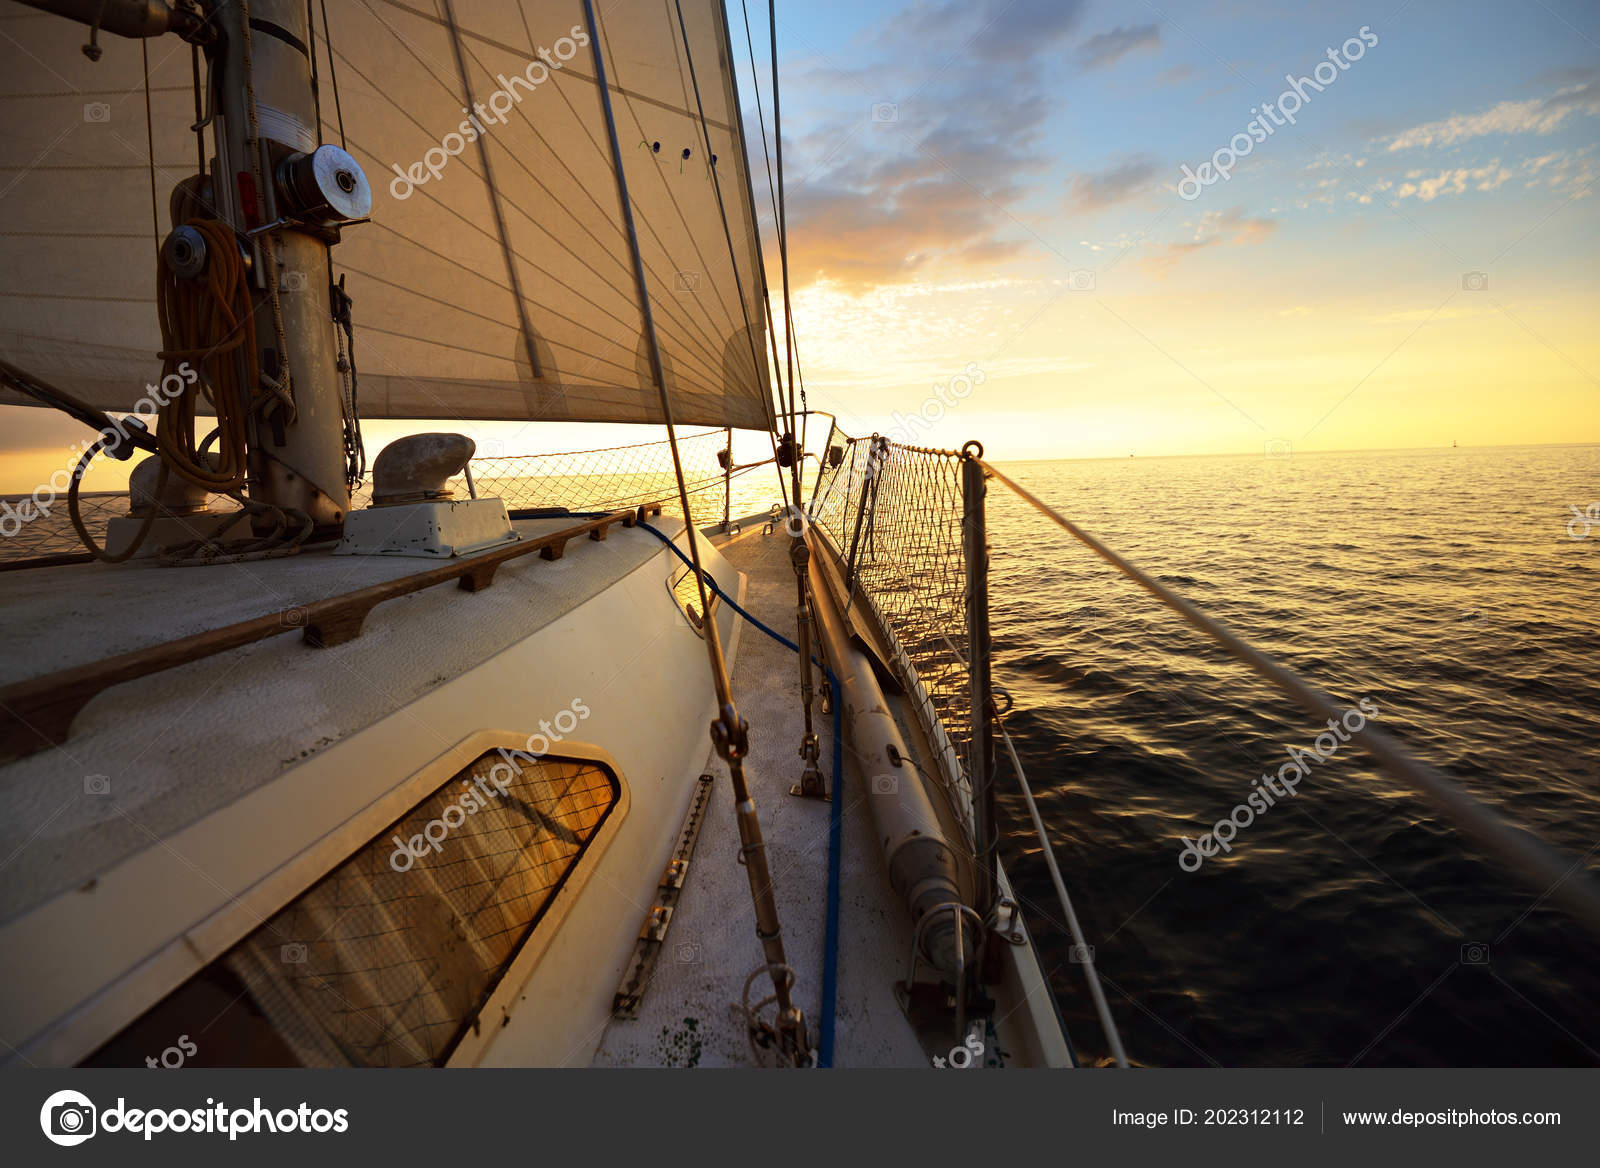 depositphotos_202312112-stock-photo-view-deck-bow-sail-yacht.jpg afbeelding afbeelding